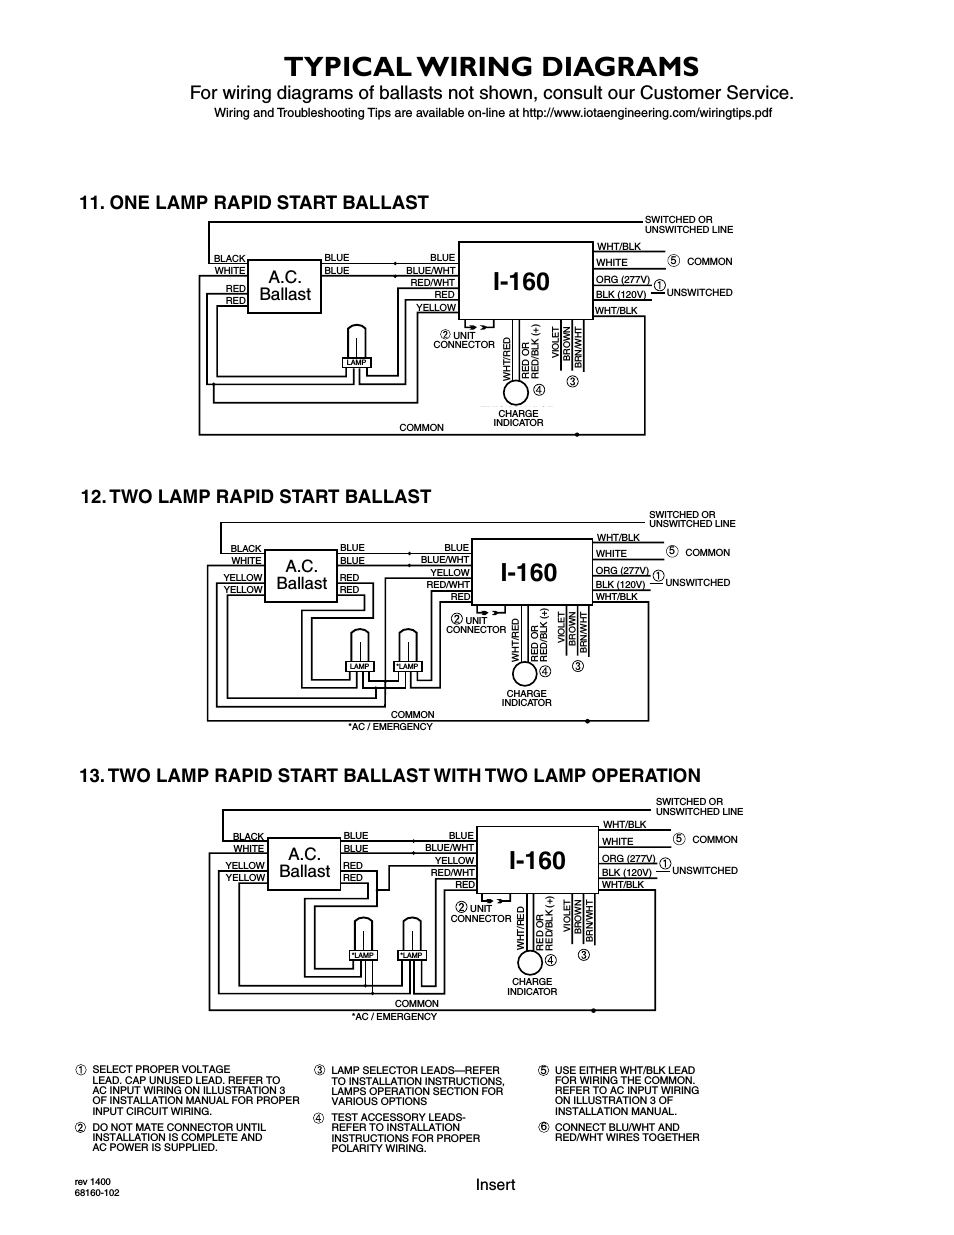 Typical Wiring Diagrams, I-160, A.c. Ballast | Iota I-160 User - Ballast Wiring Diagram